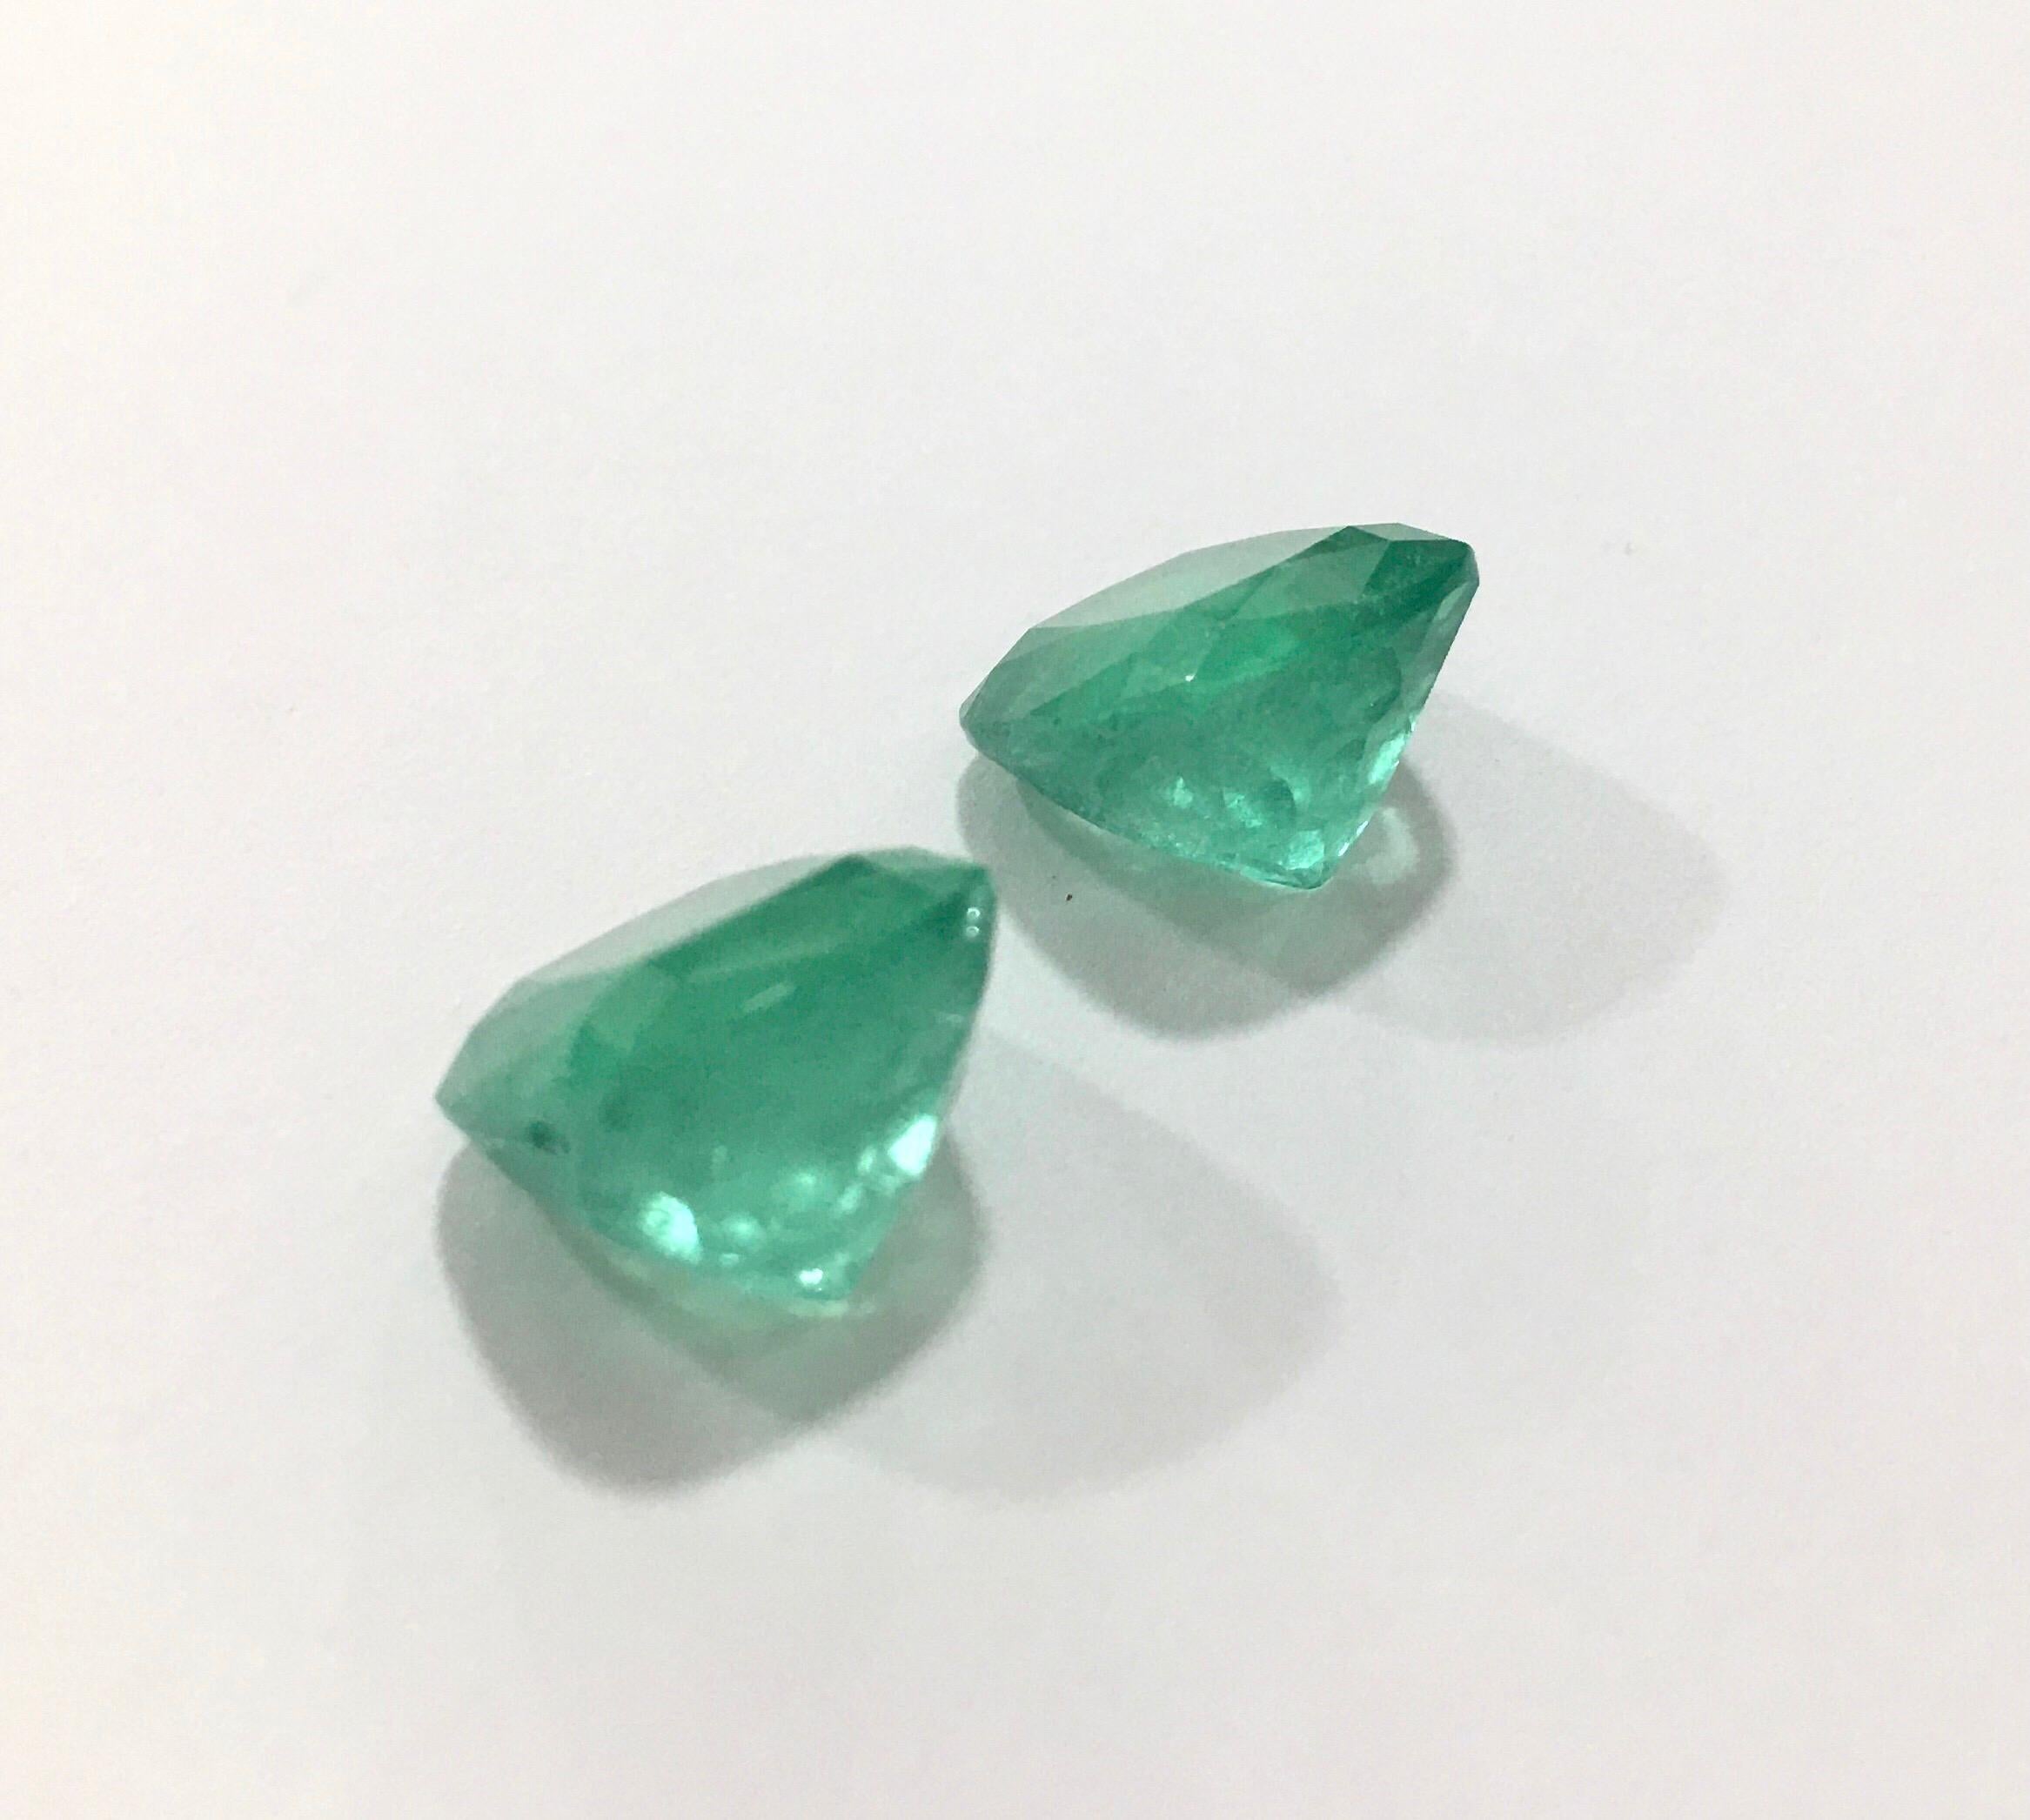 Contemporary Natural Cushion Colombian Emeralds 11.63 Carats Pair or Individual 